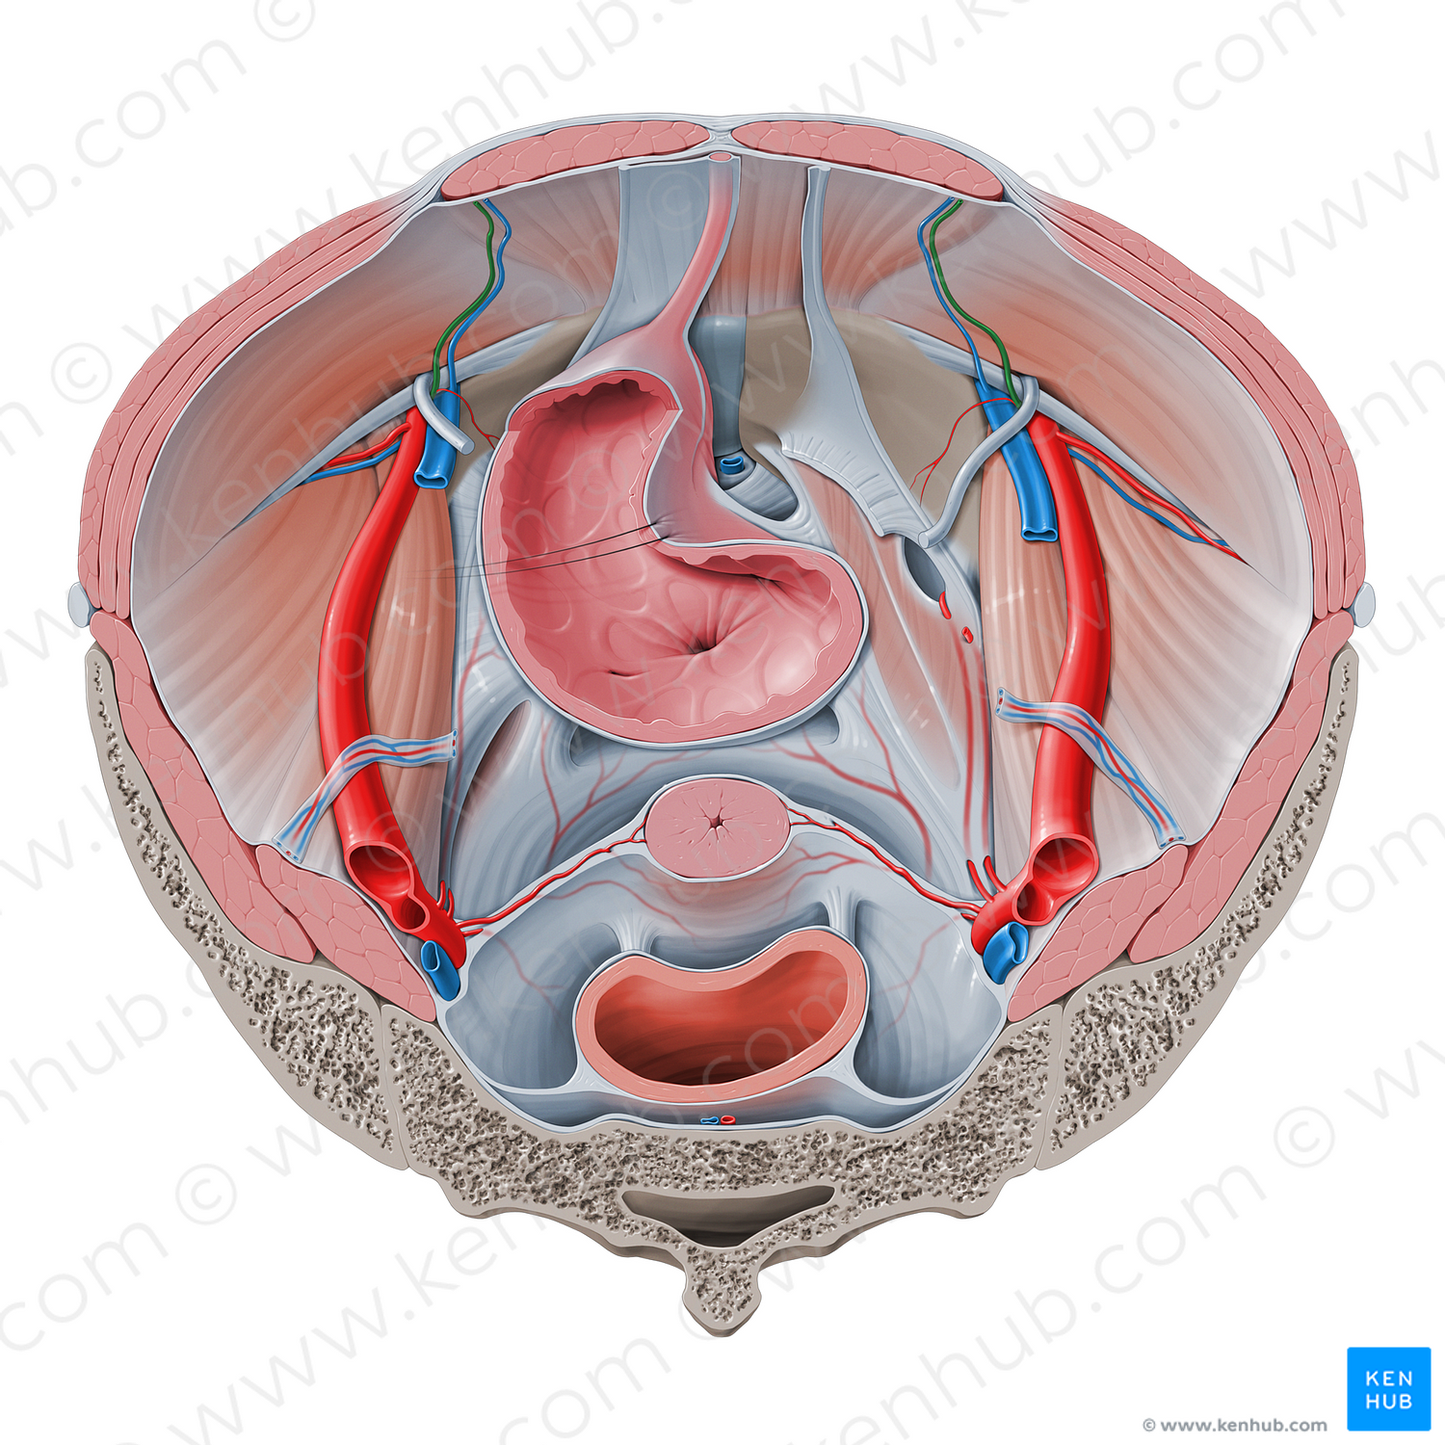 Inferior epigastric artery (#1193)